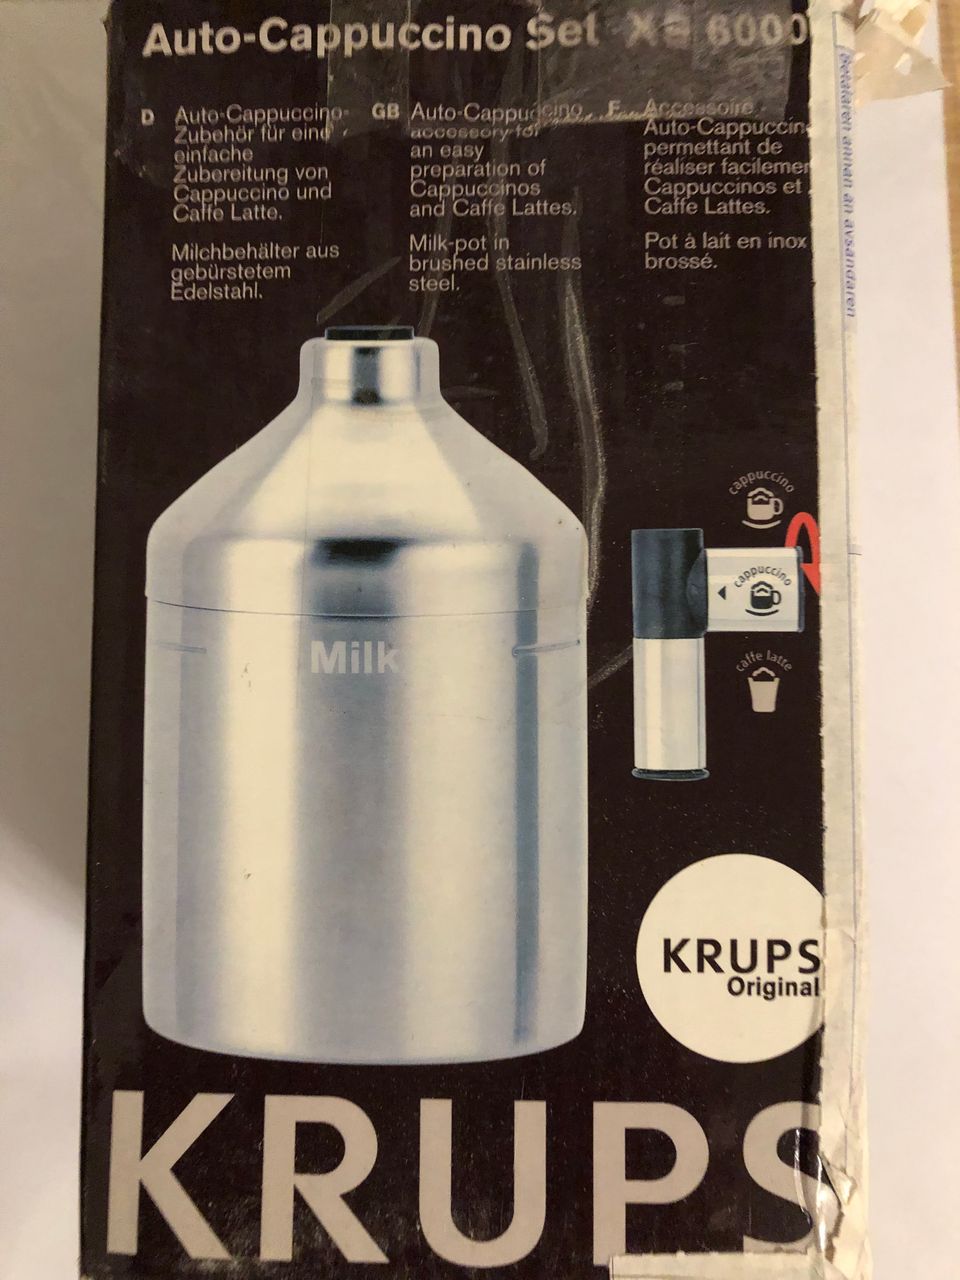 KRUPS Auto-Cappuccino XS 6000